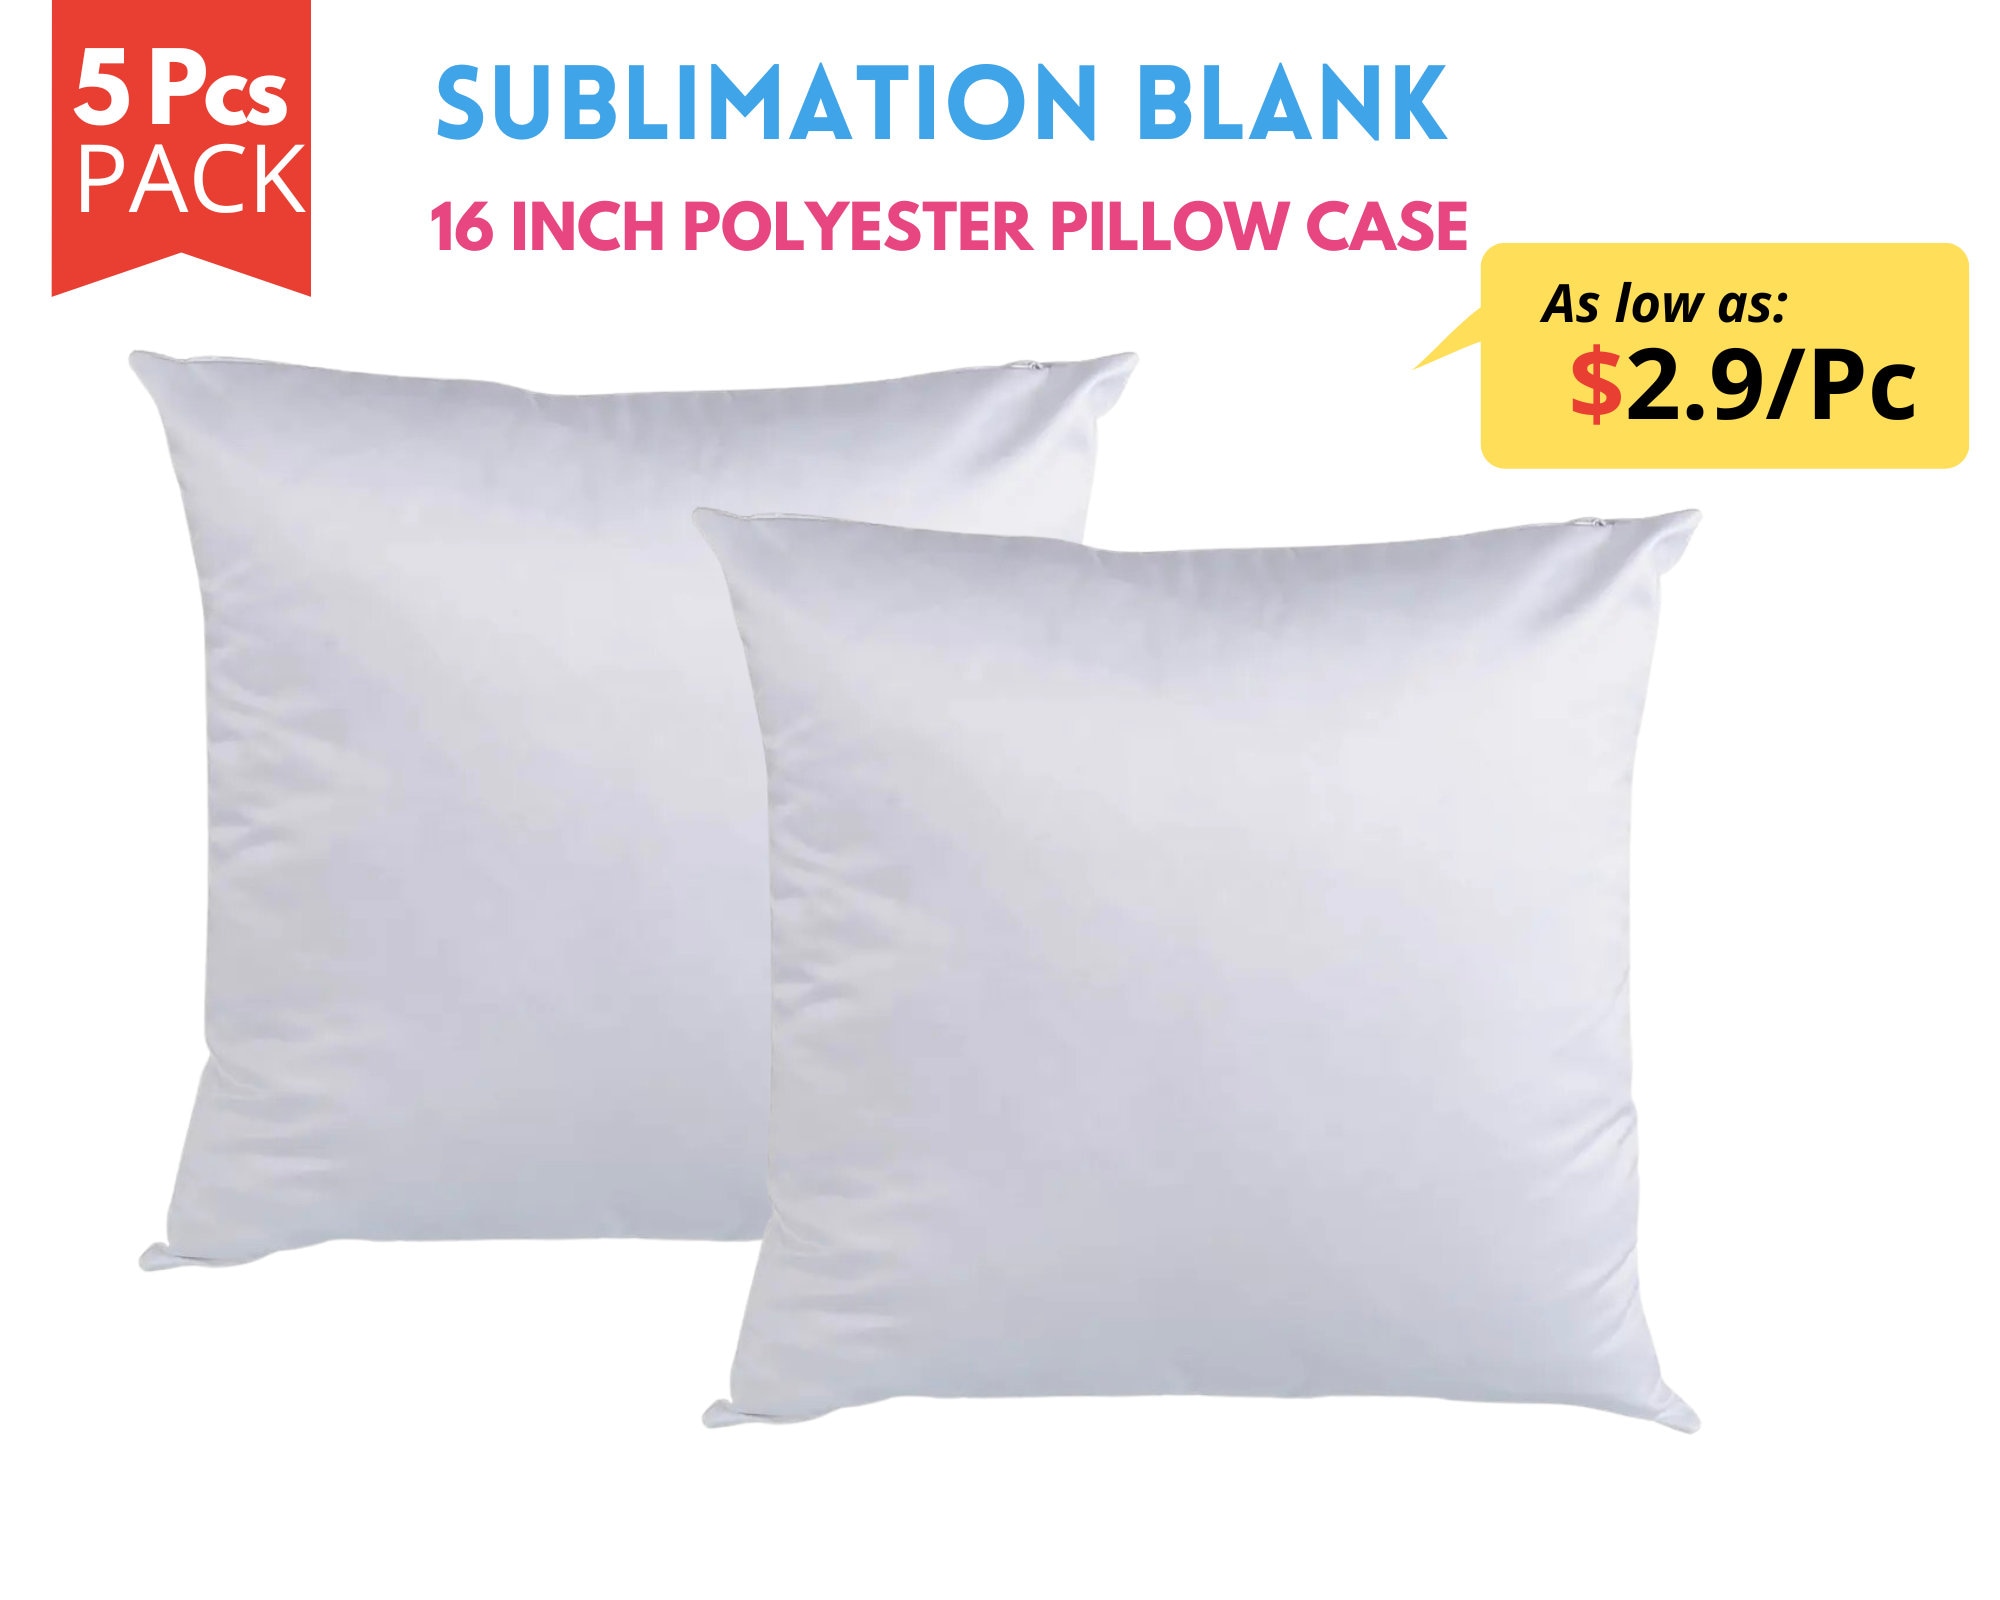 Sublimation Blank SubliLinen Lumbar Pillow Case